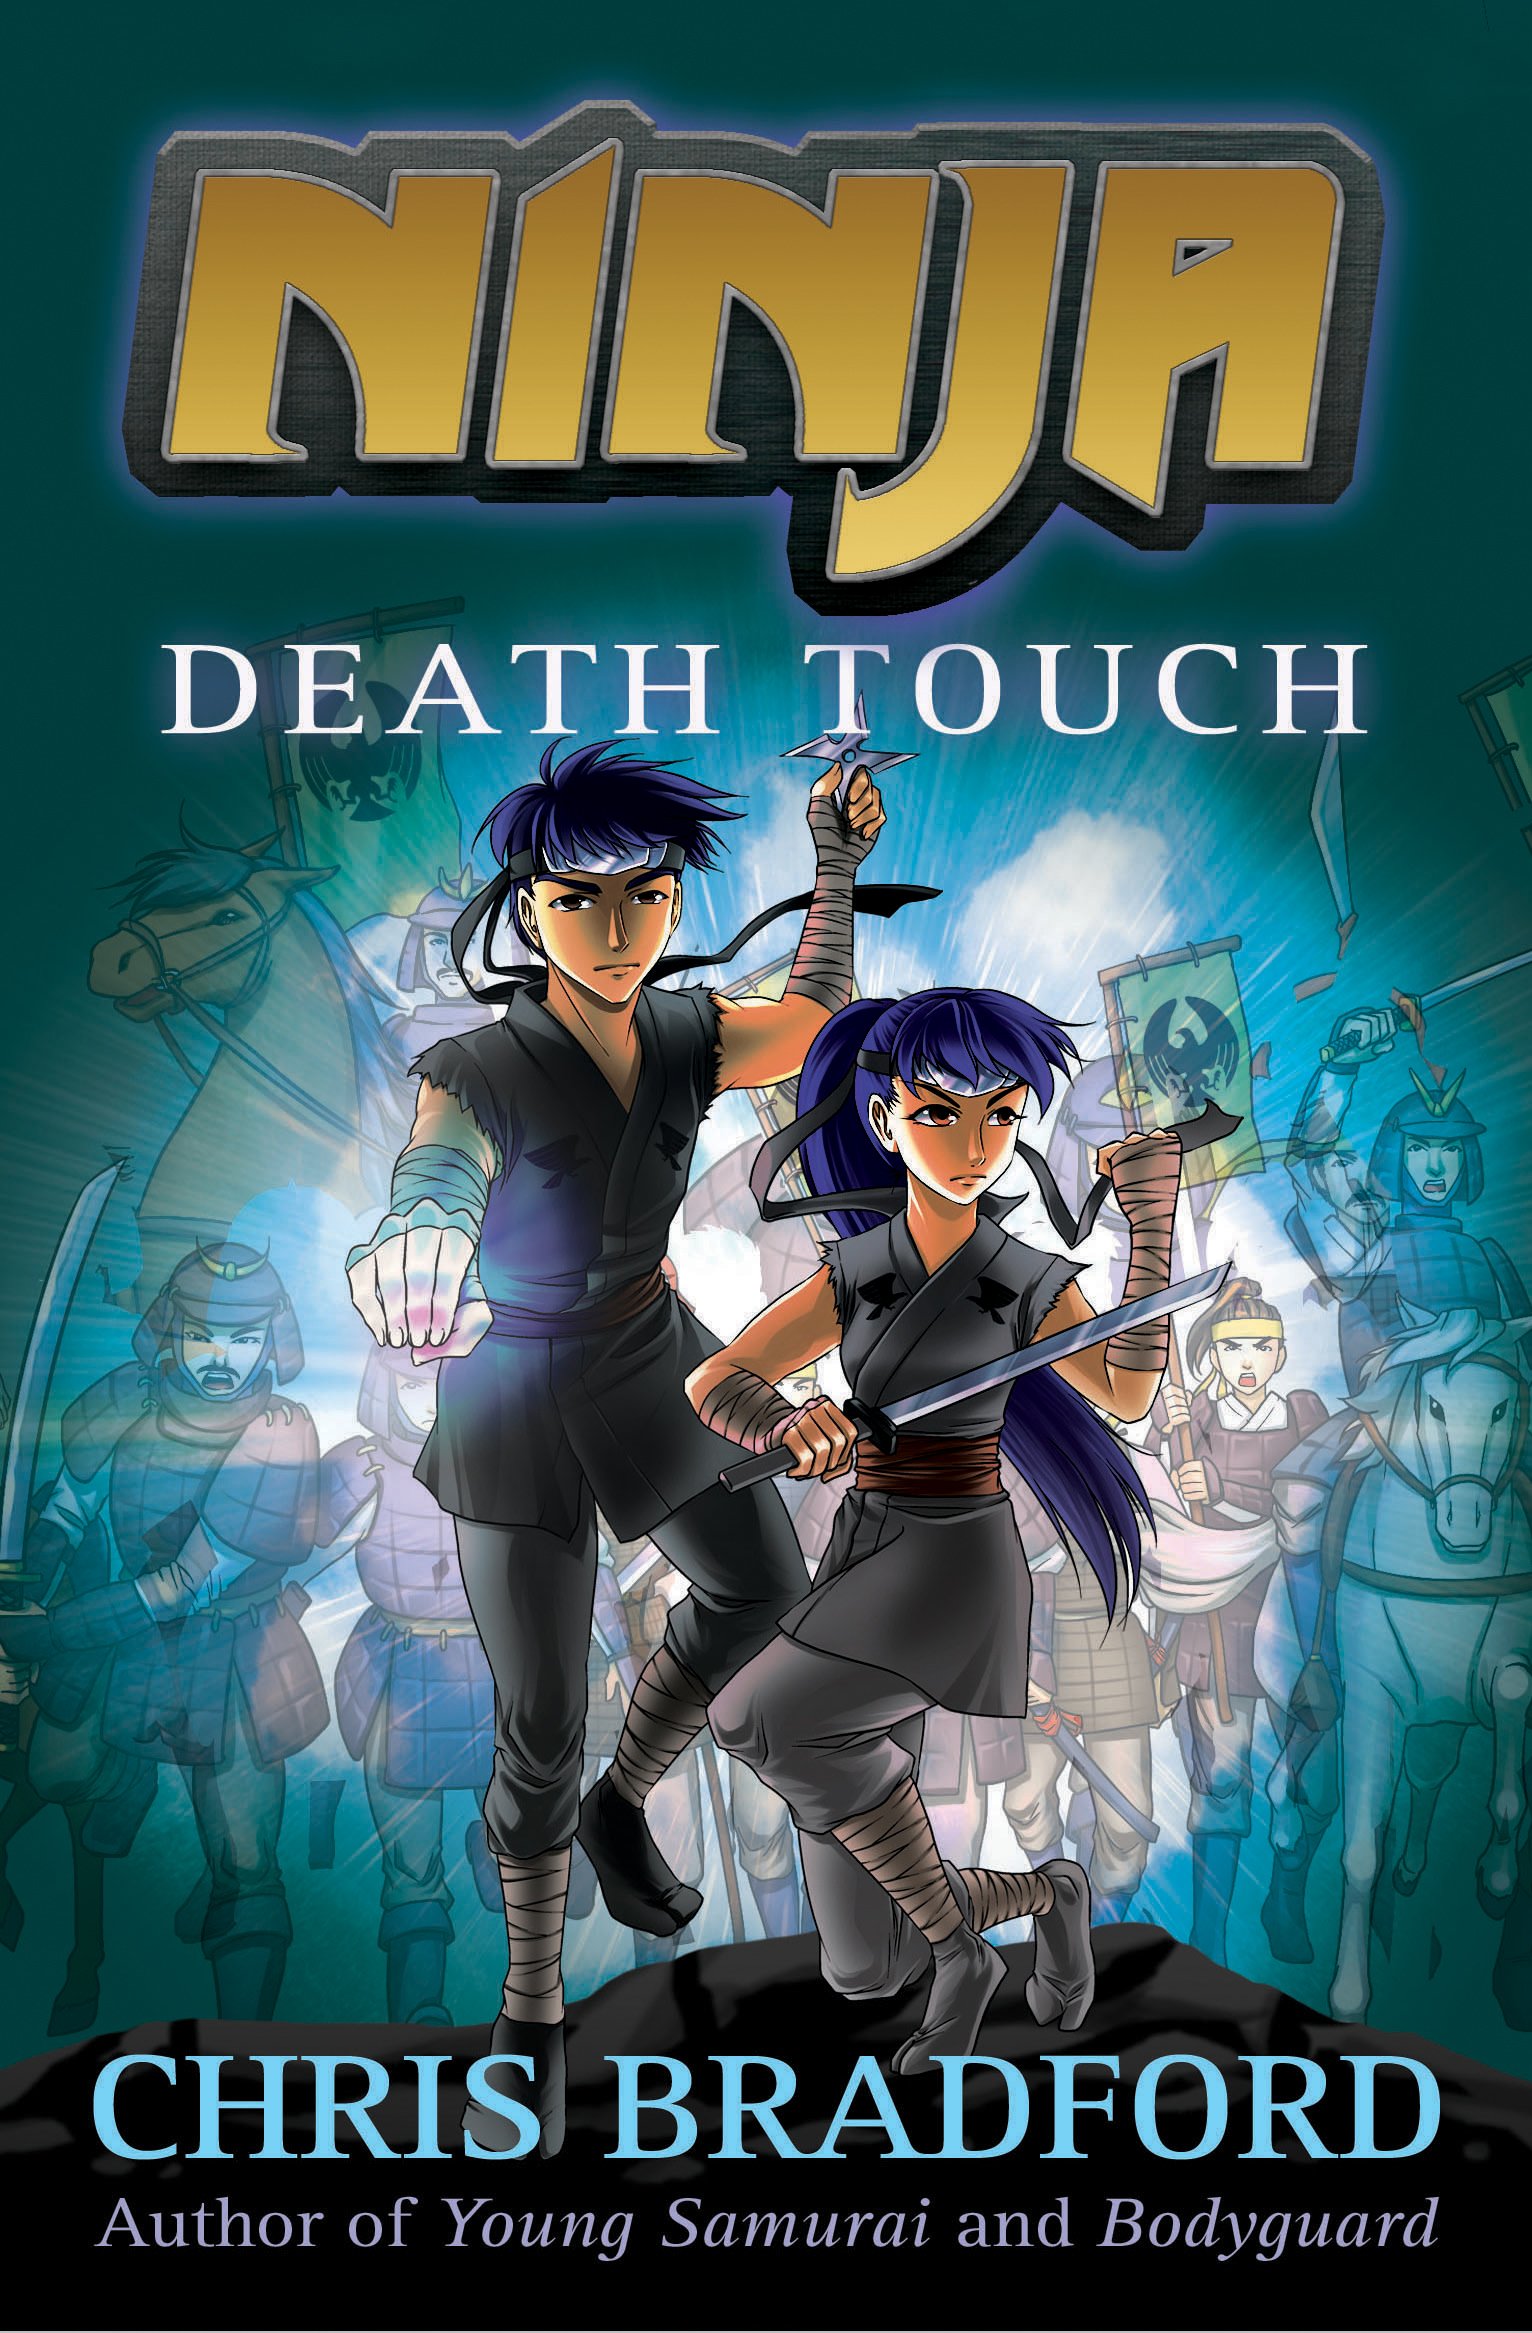 Ninja: Death Touch by Chris Bradford